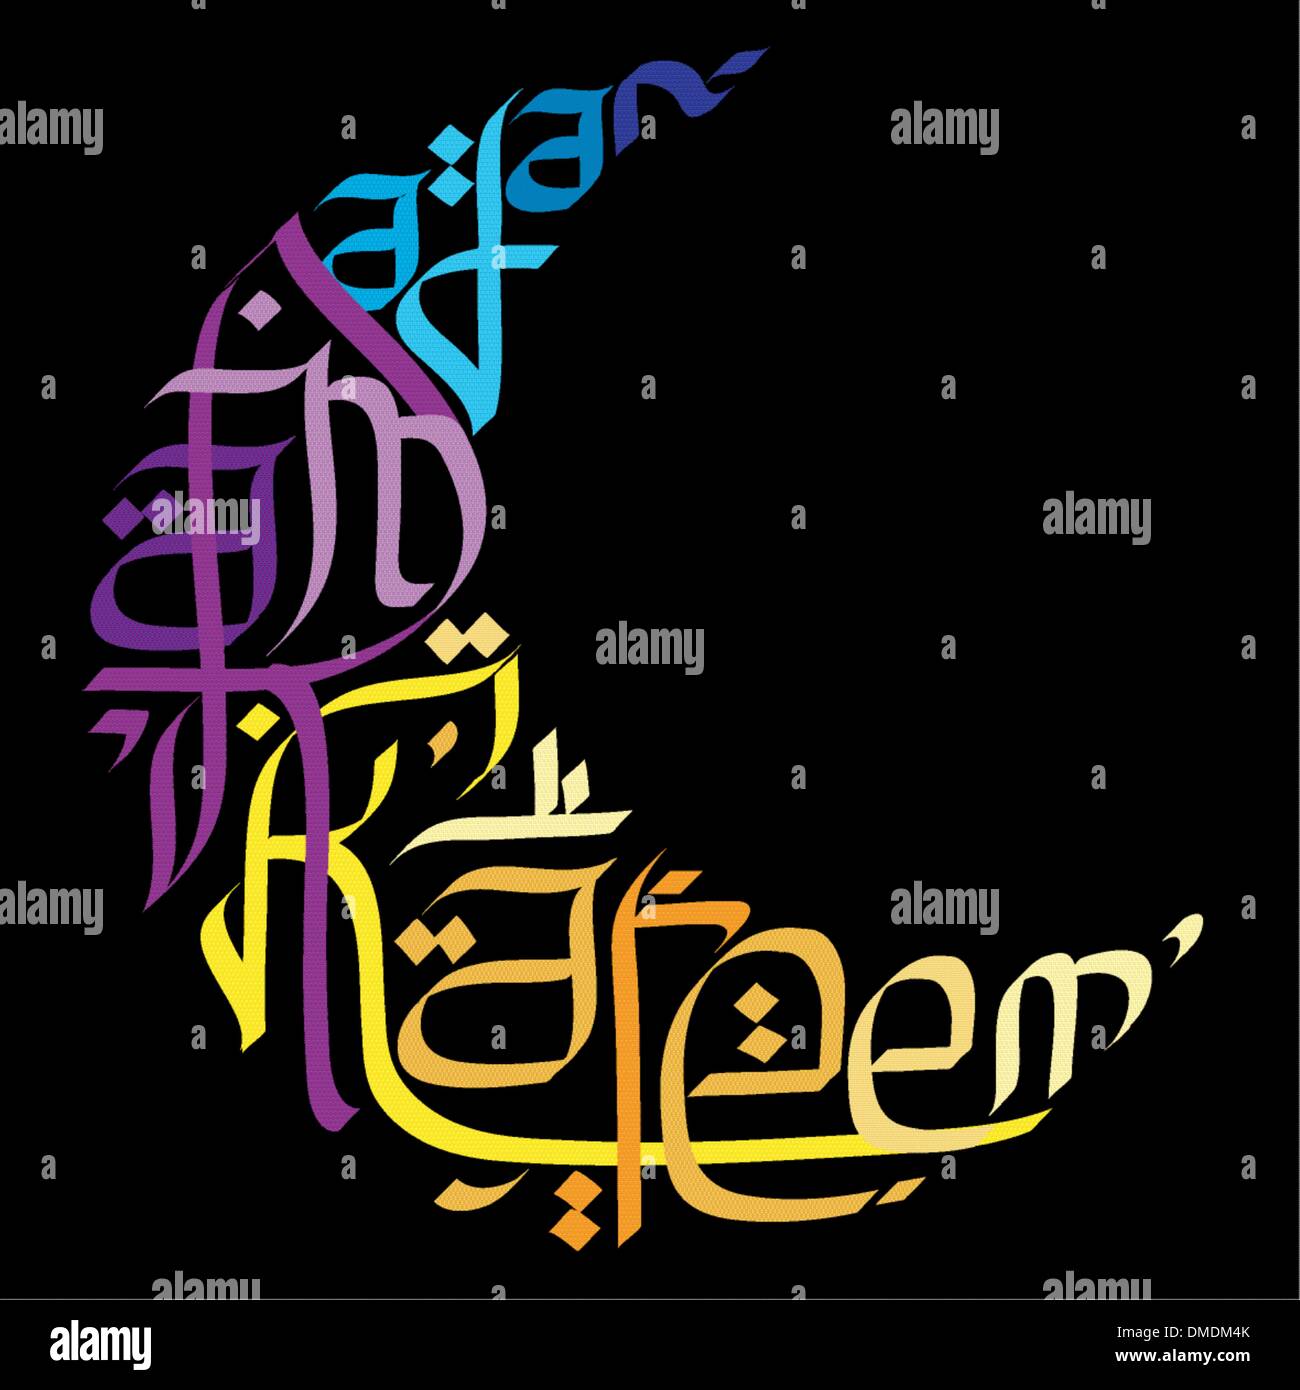 Ramadan greetings in english calligraphy Stock Vector